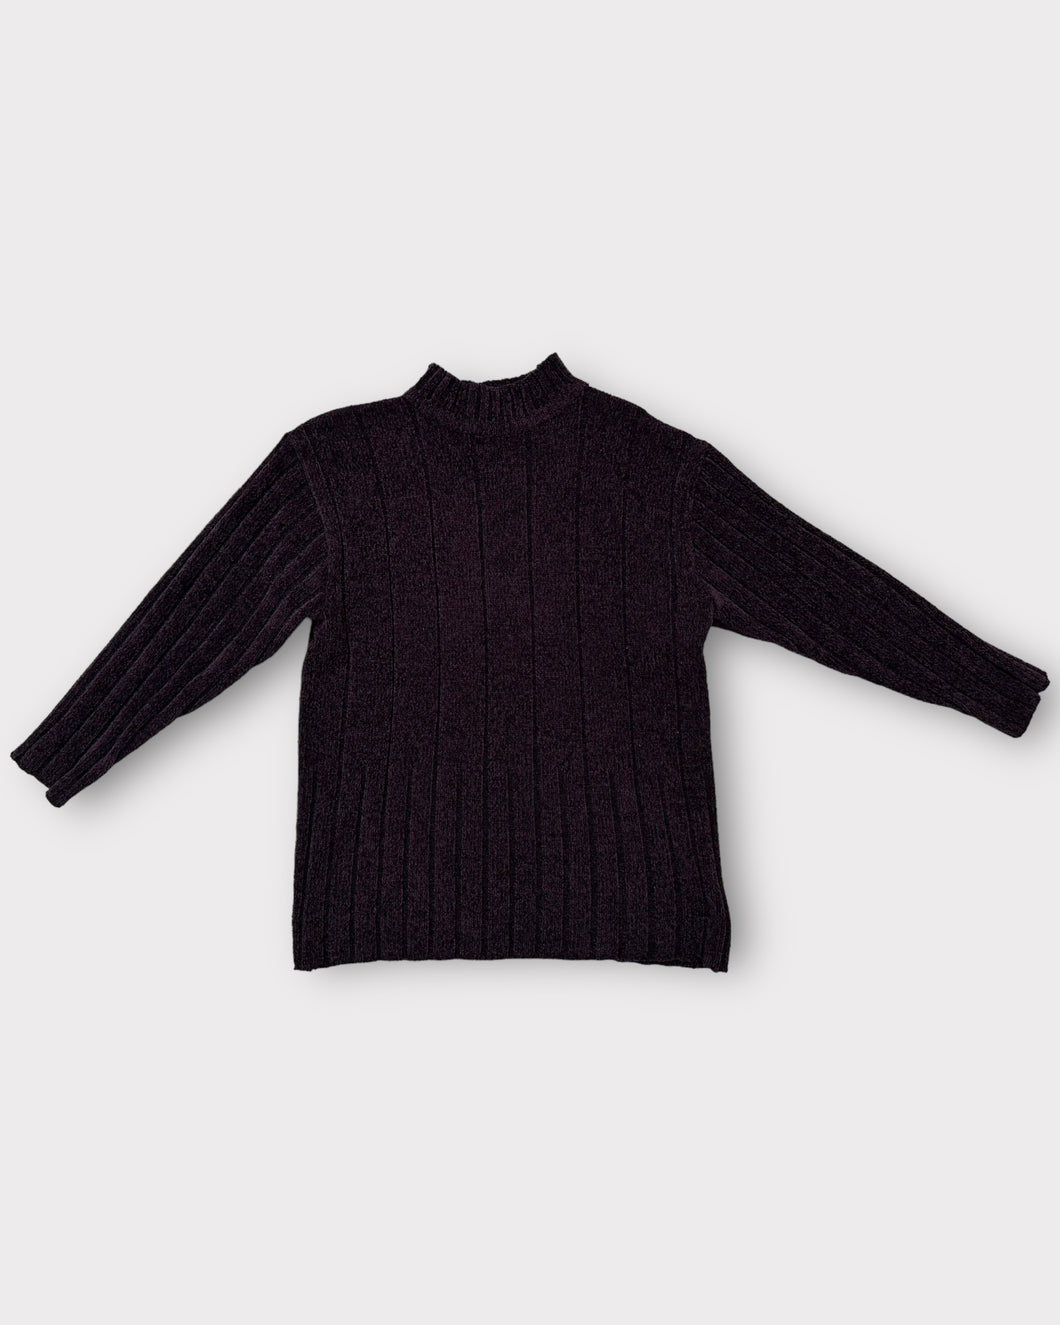 Classic Elements Purple Knit Turtleneck Sweater (L)